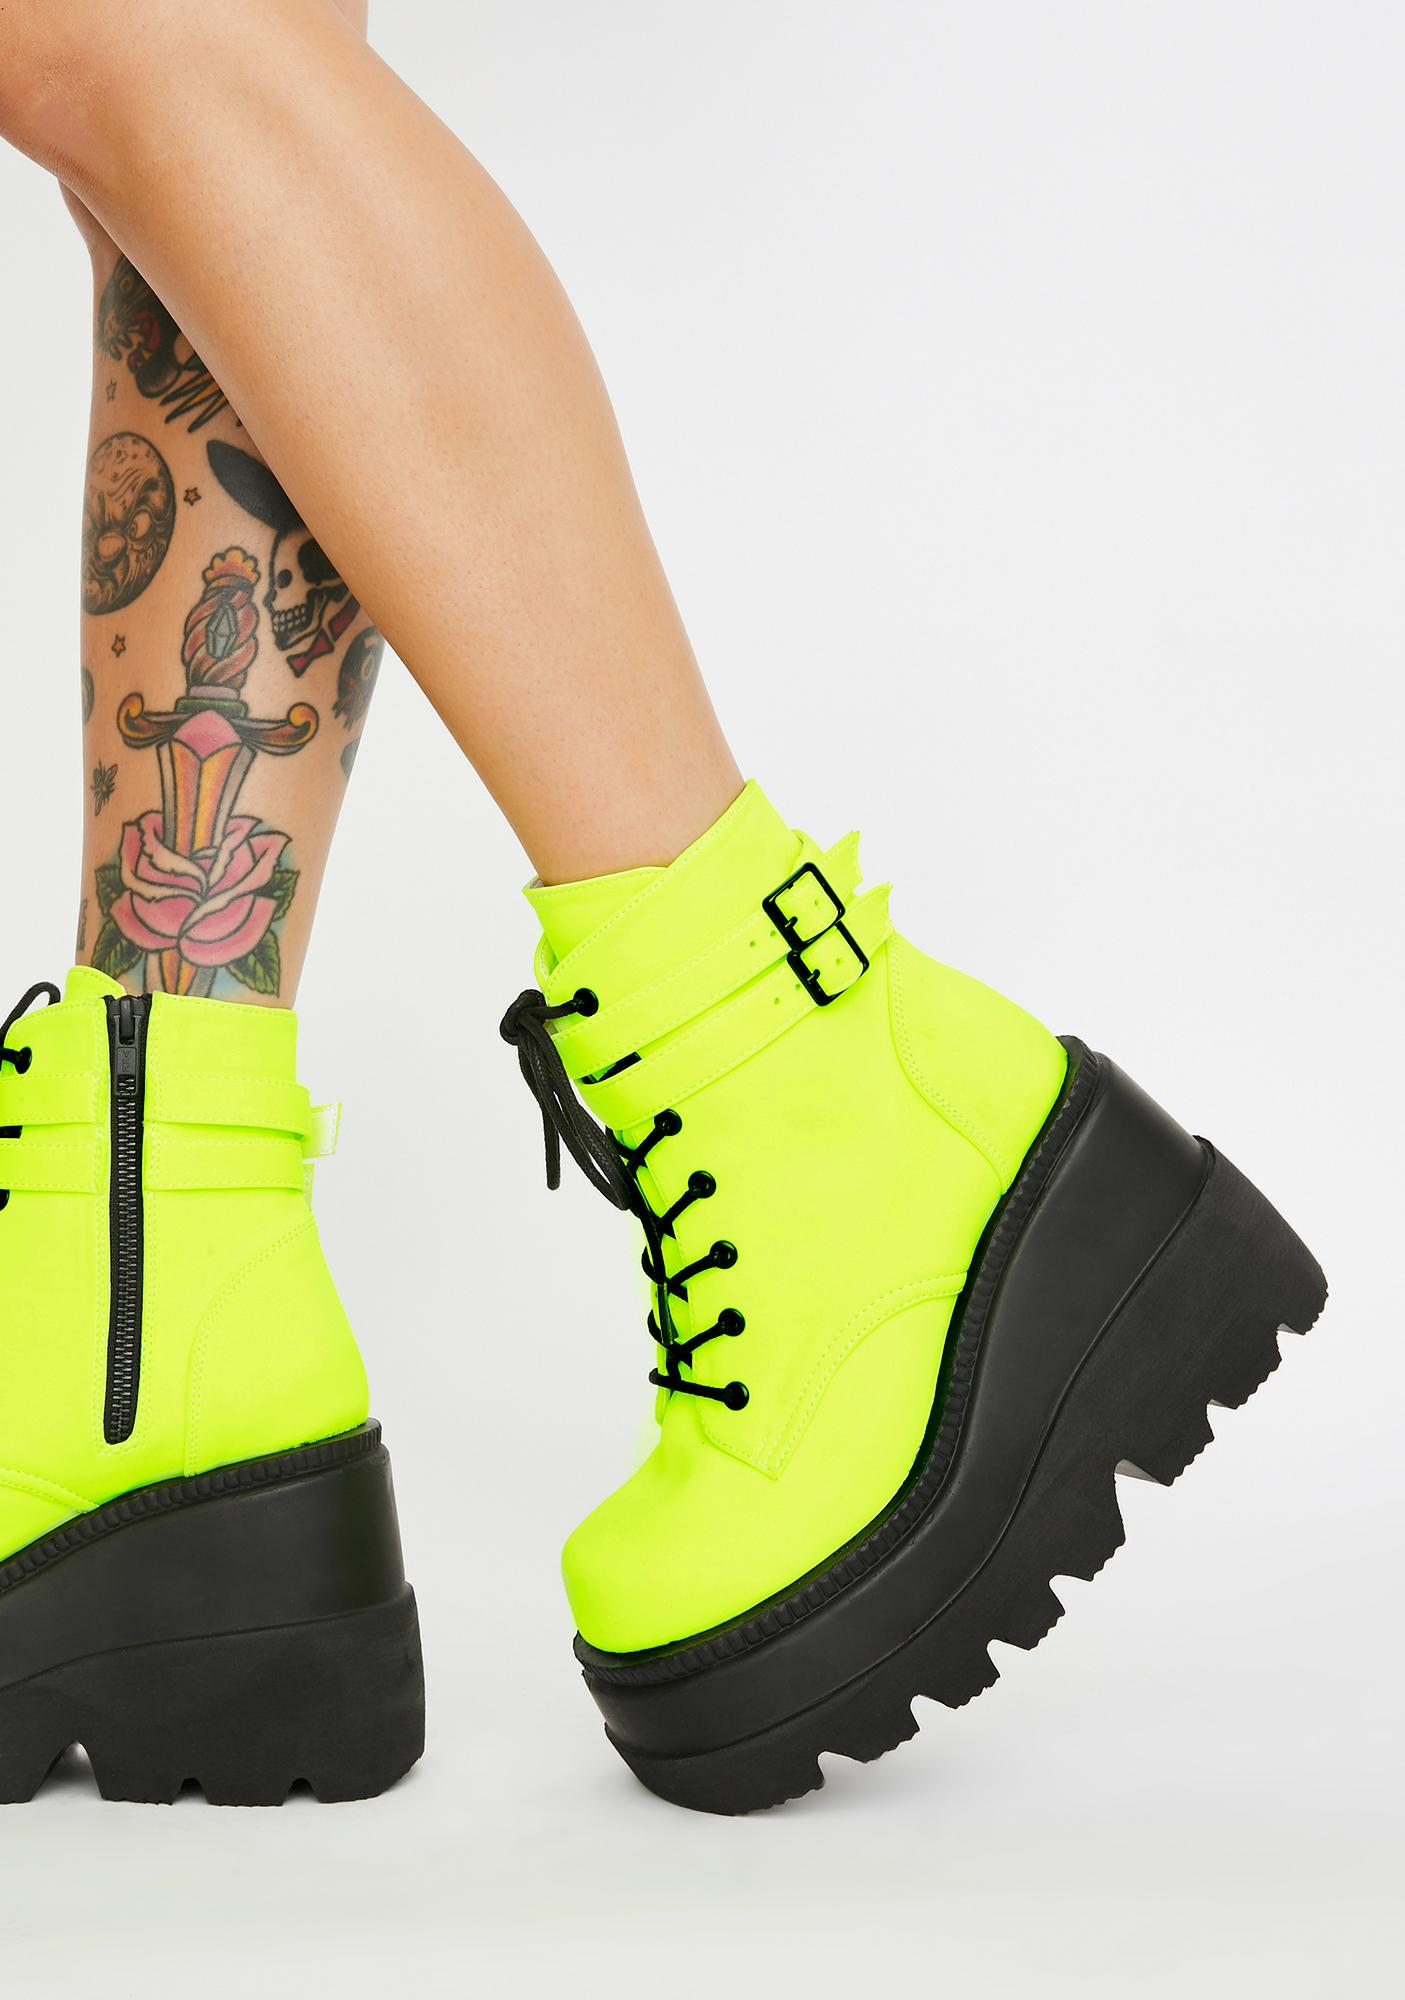 neon yellow boots